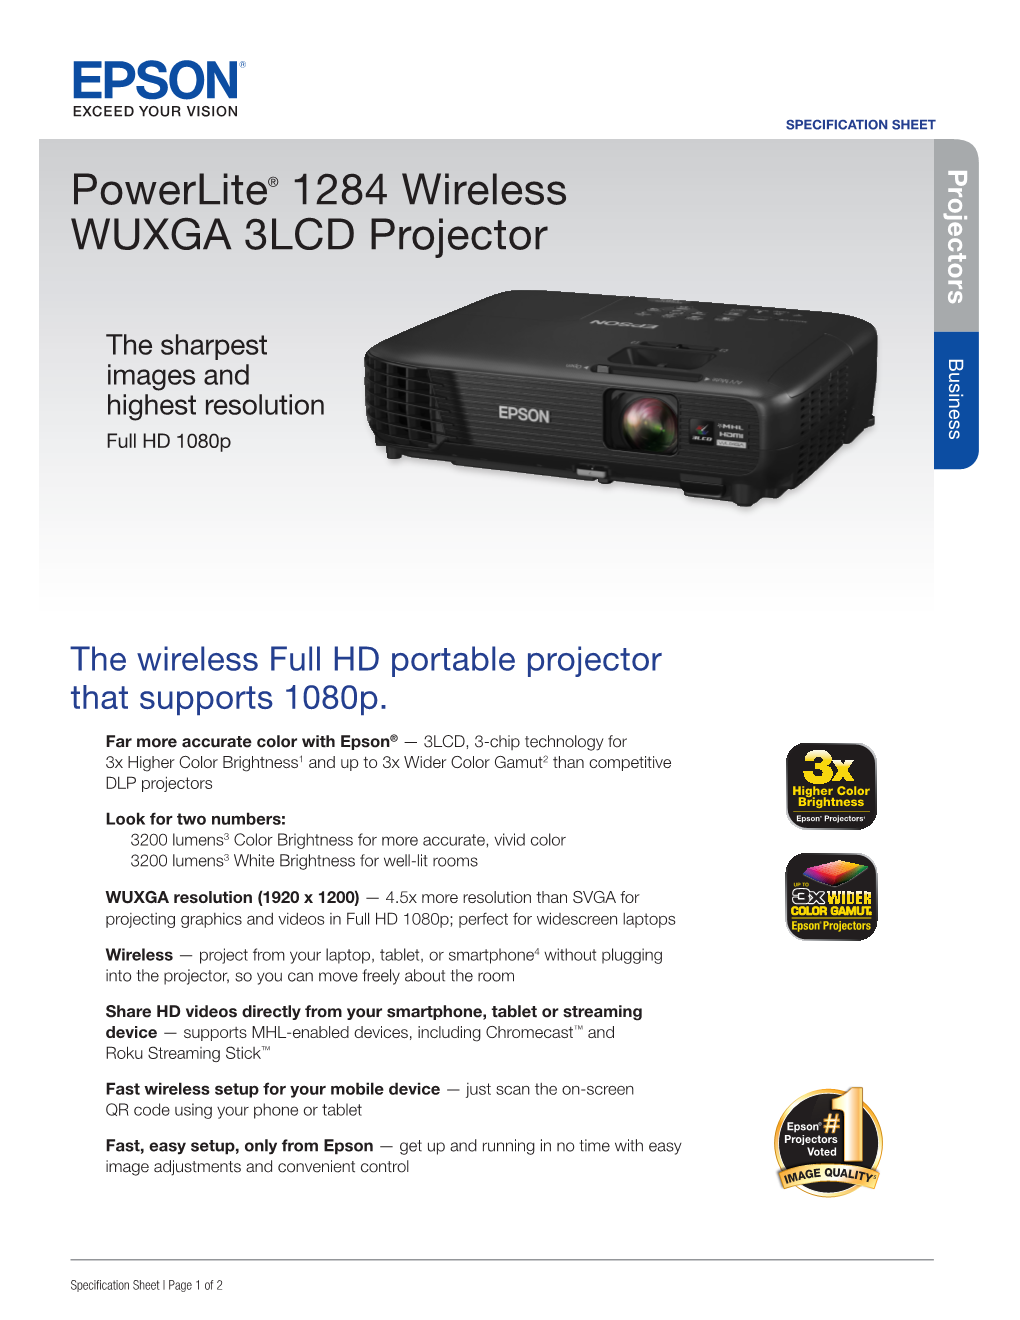 Powerlite® 1284 Wireless WUXGA 3LCD Projector